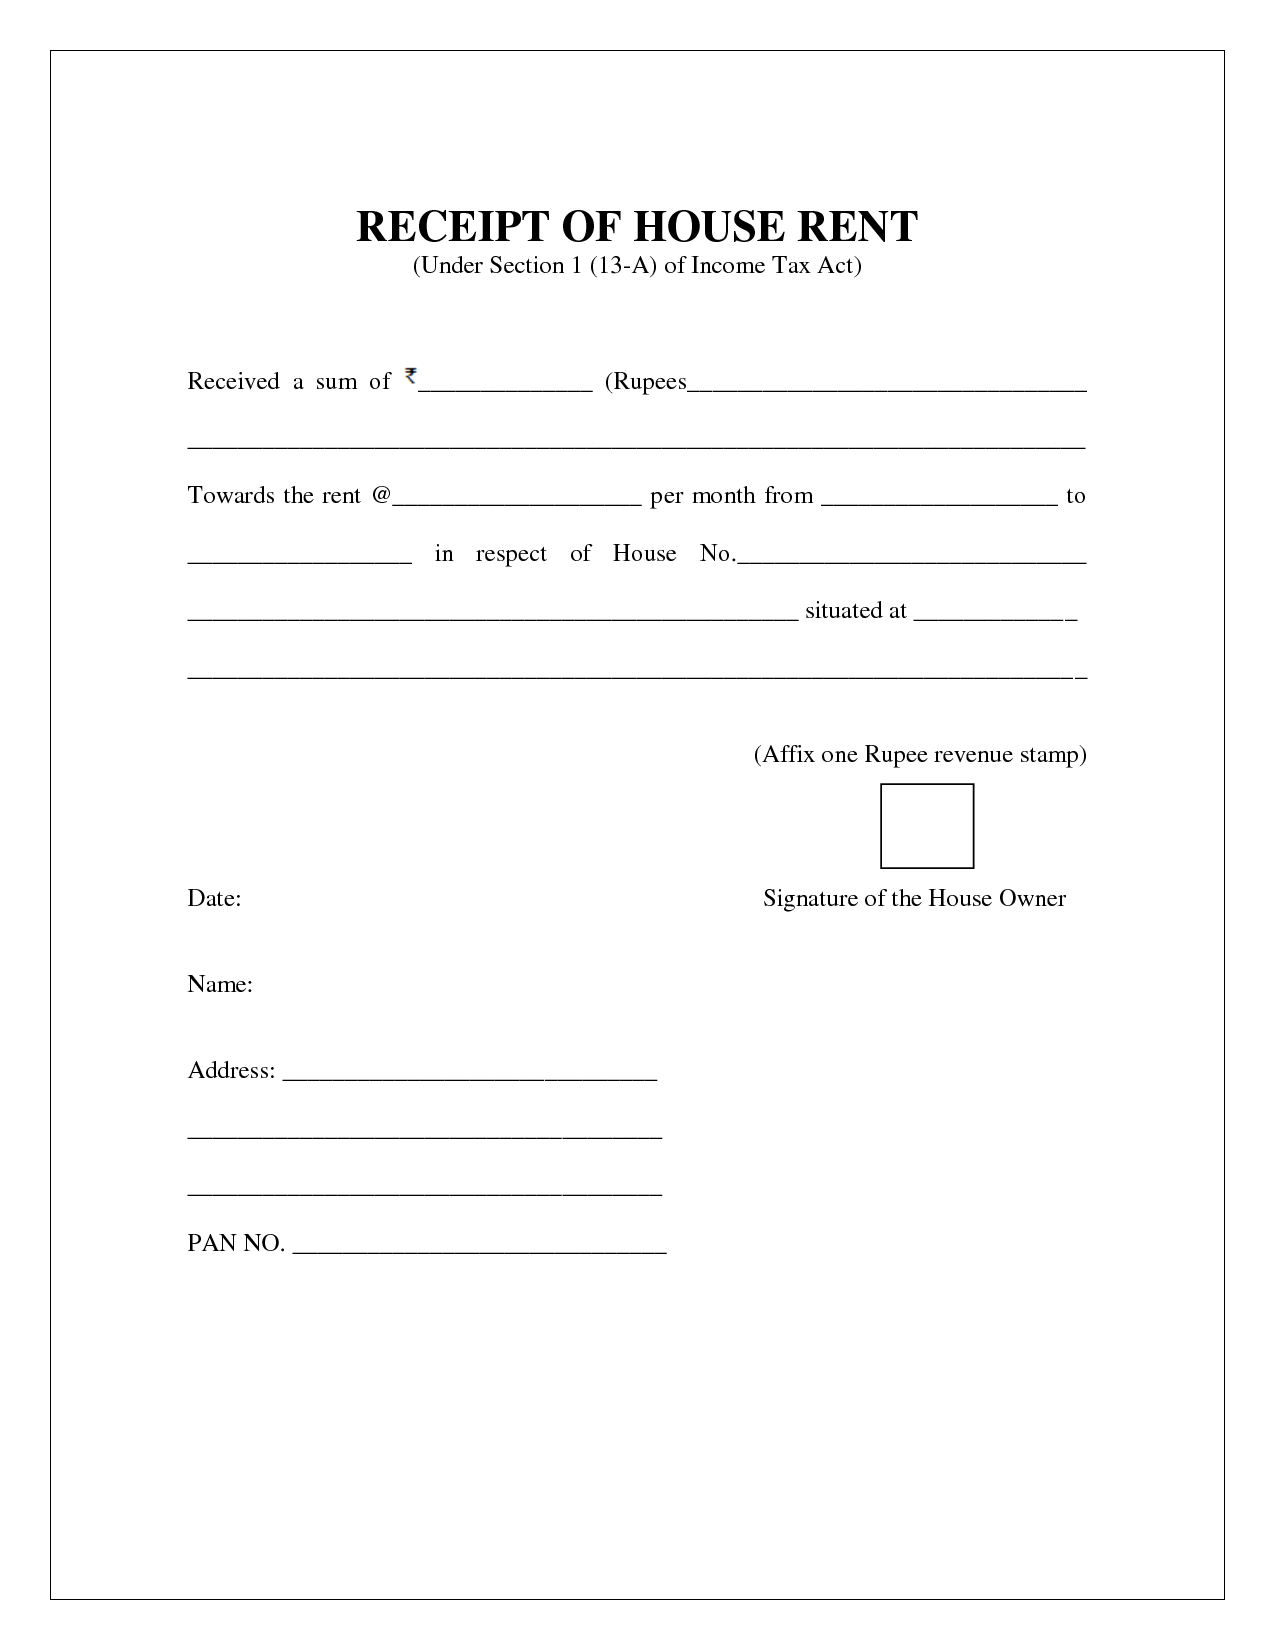 house-rent-slip-pdf-invoice-template